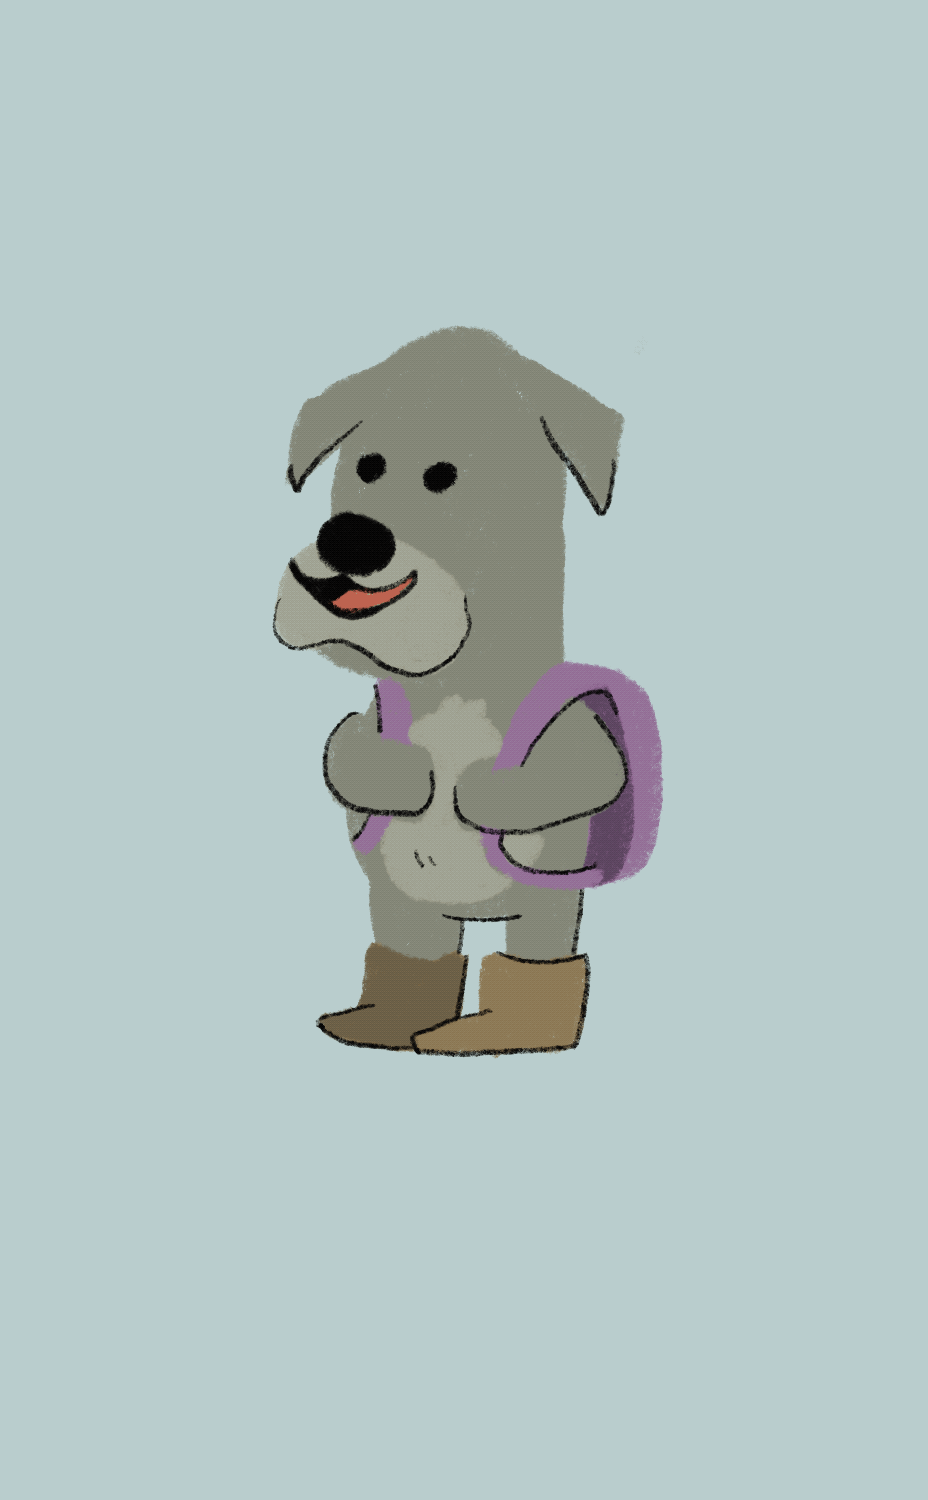 Grey dog wearing a purple backpack